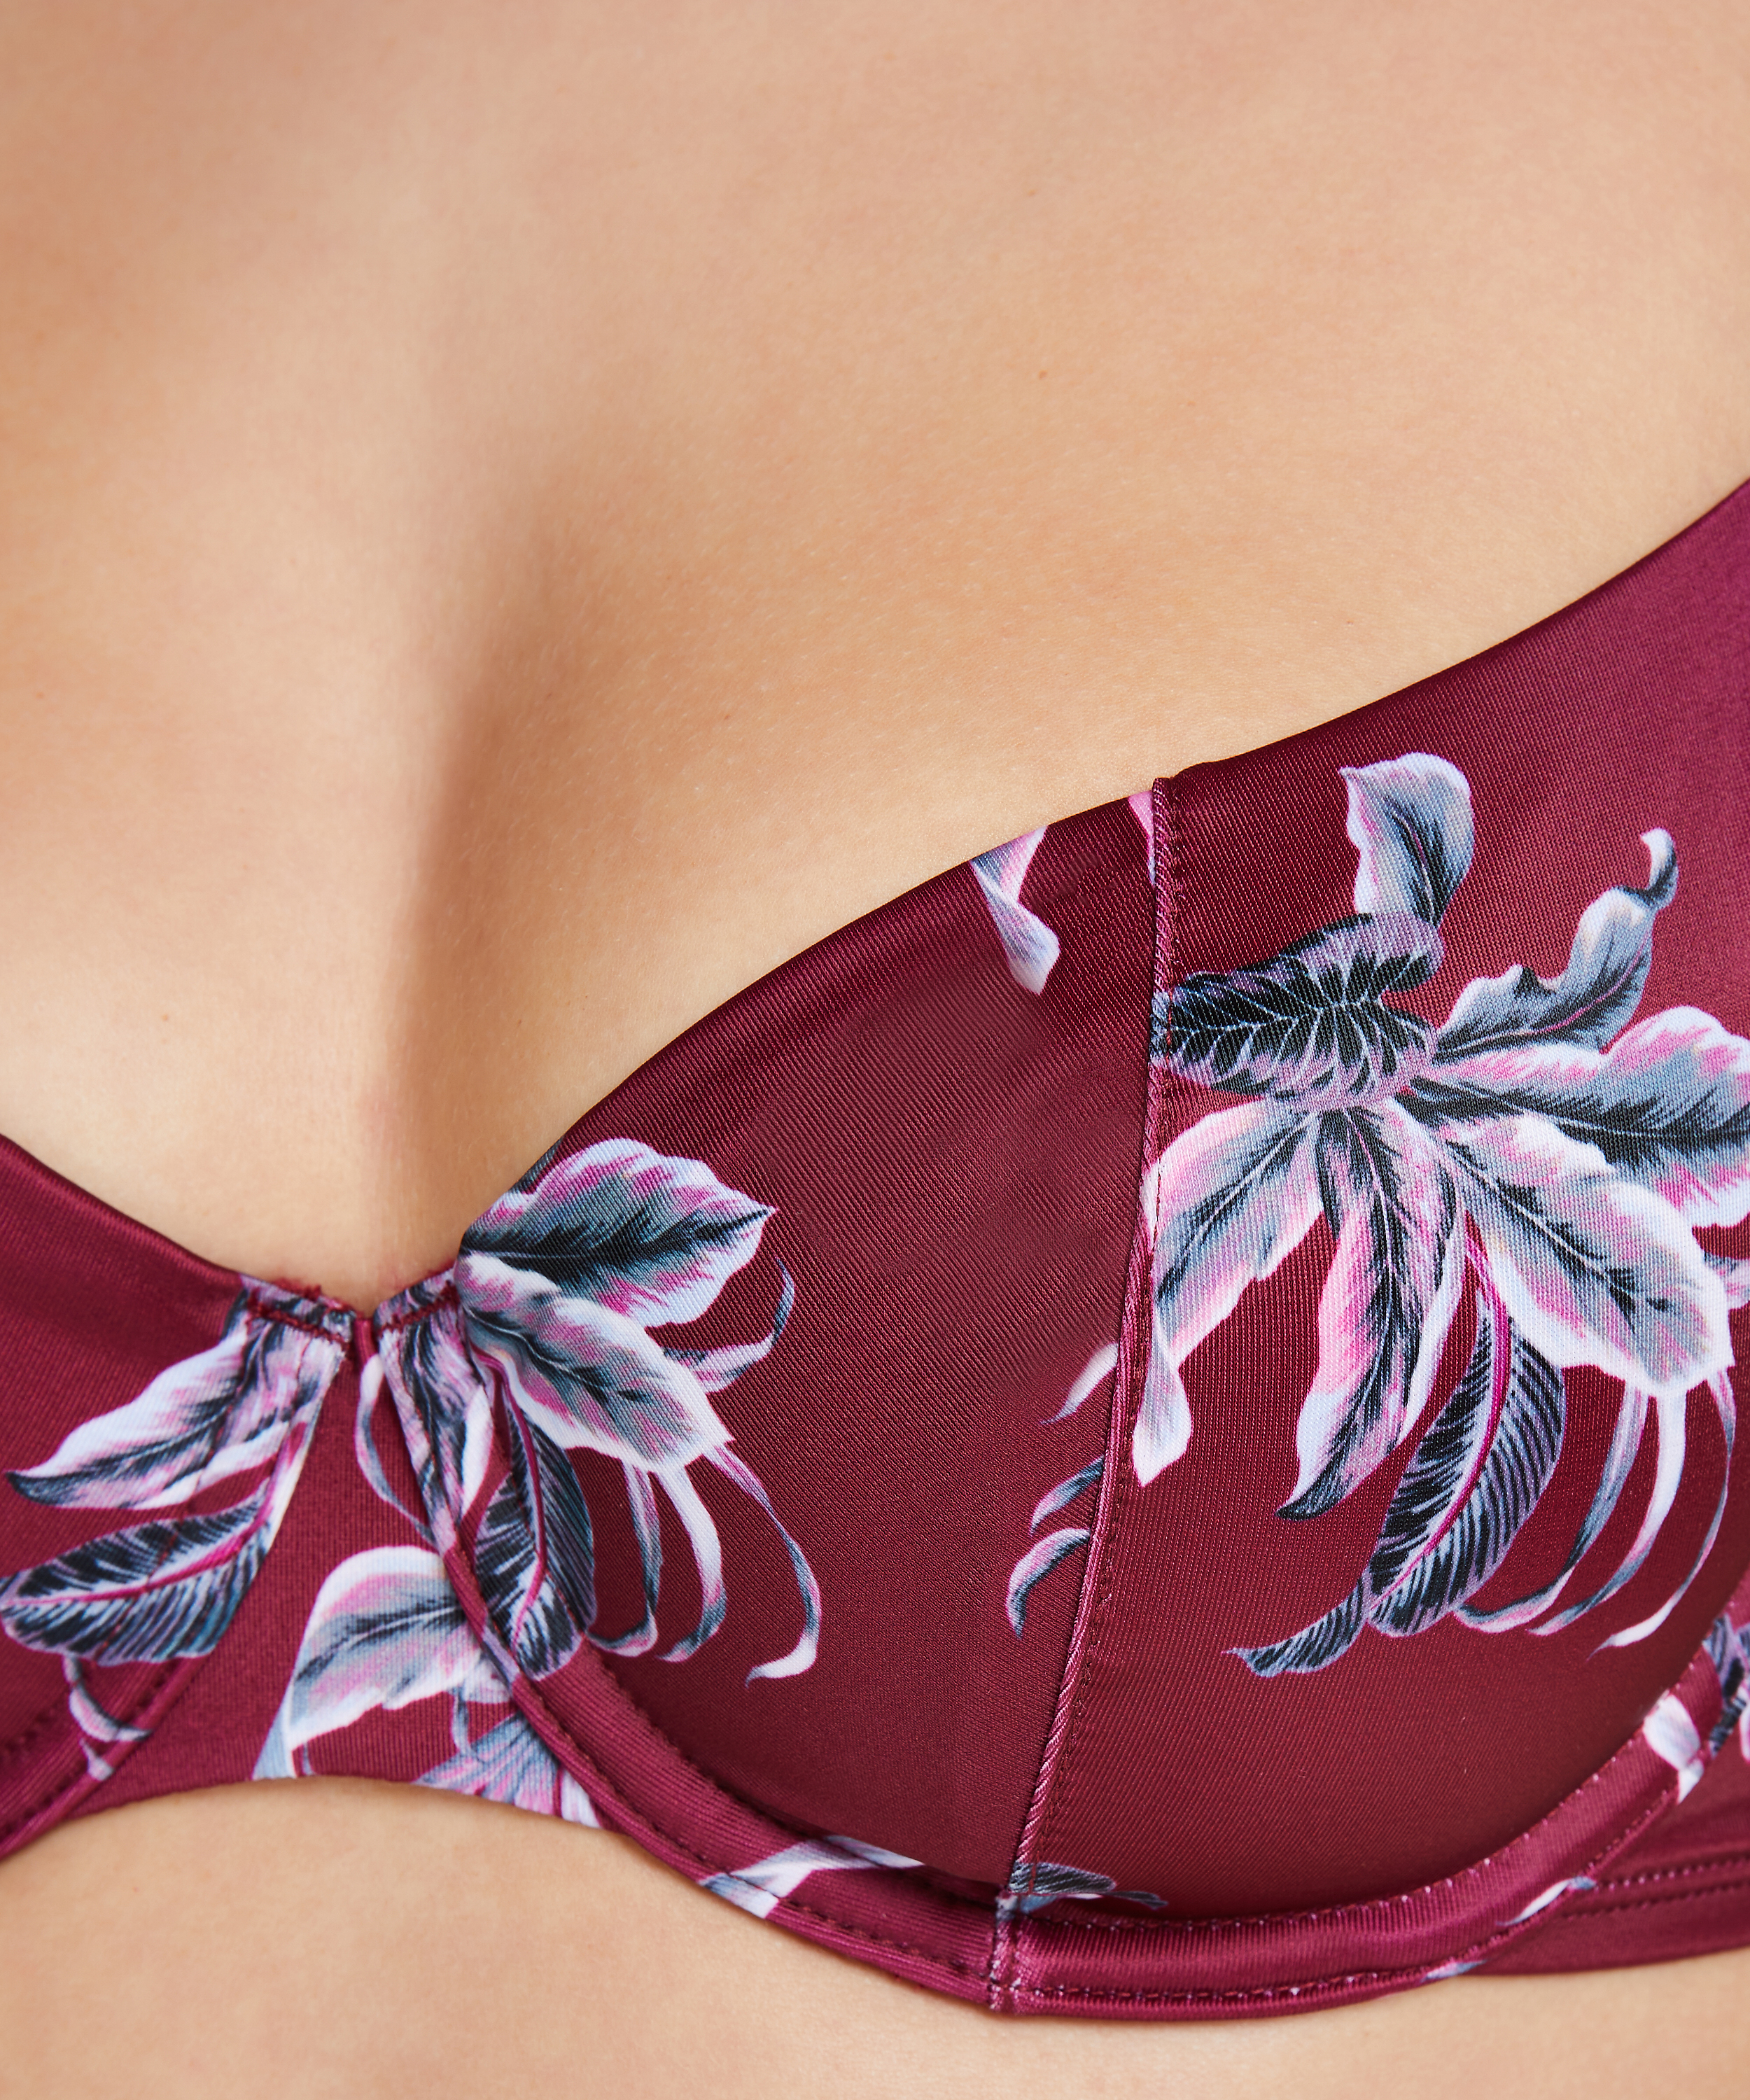 Tropic Glam non-padded underwired bikini top, Red, main